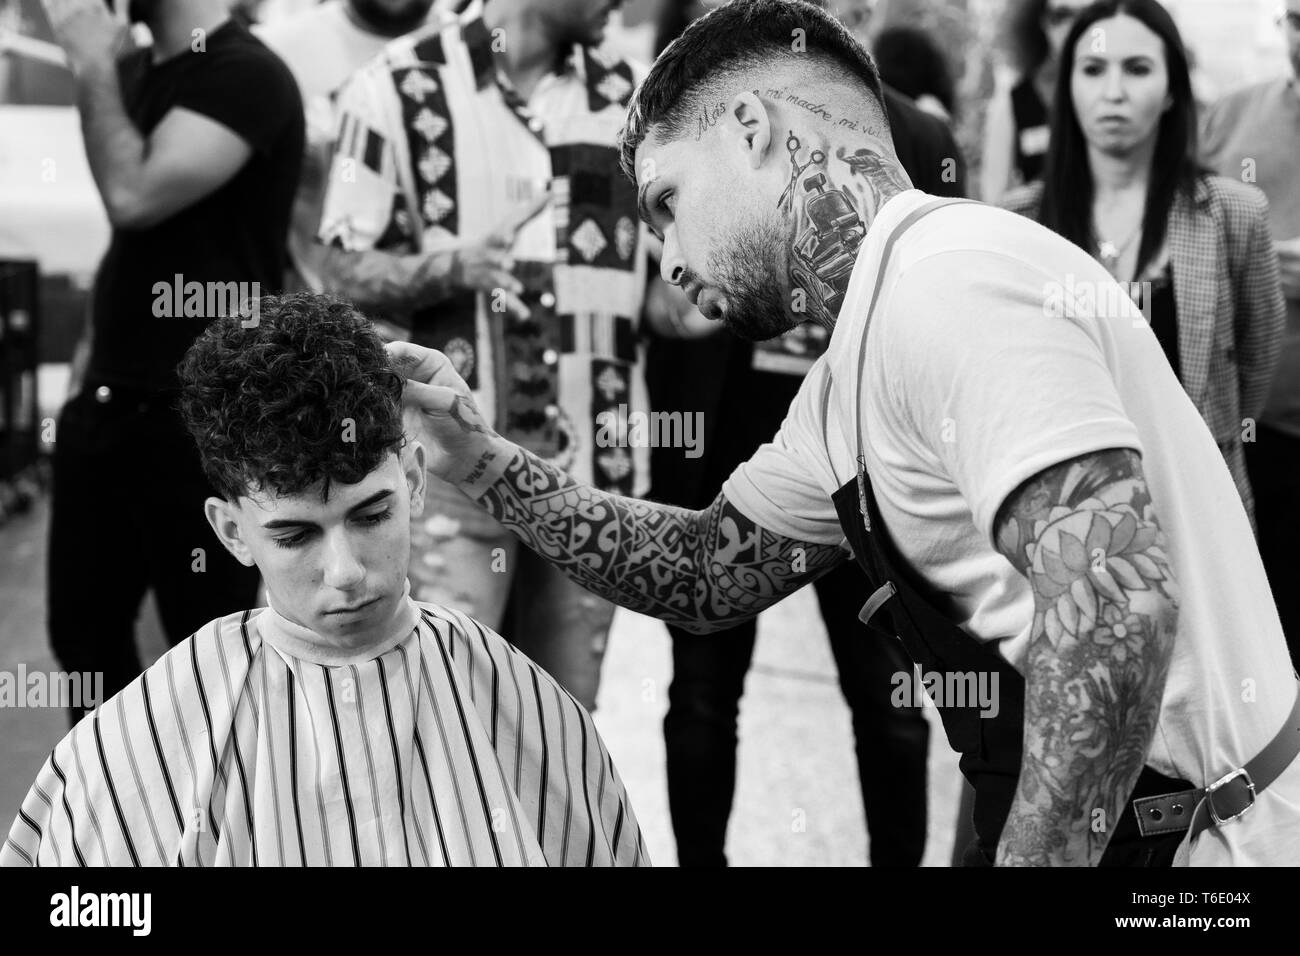 Tatuato barbiere al lavoro a Feria Internacional de la Moda a Santa Cruz de Tenerife, Tenerife, Isole Canarie, Spagna Foto Stock